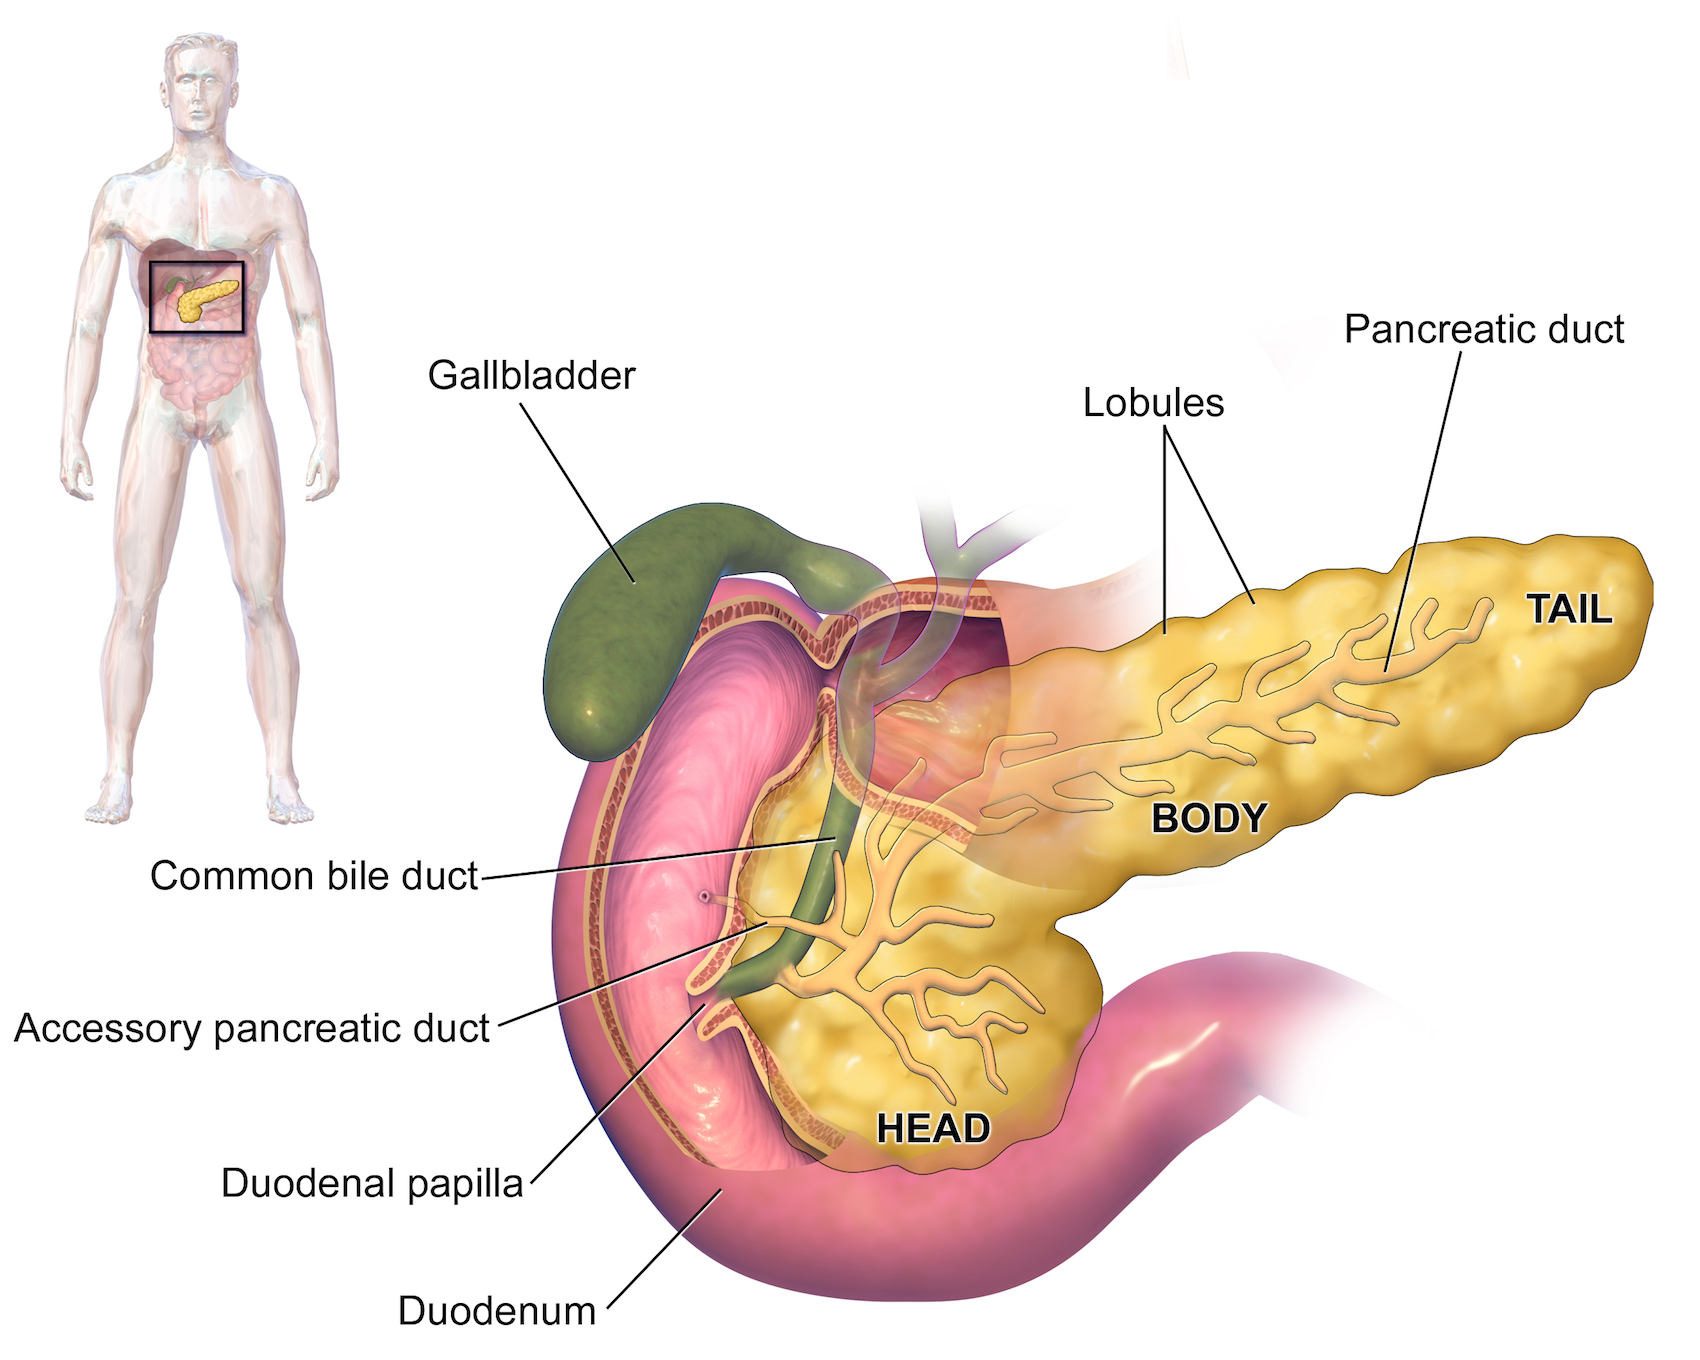 Pancreatic pseudocyst